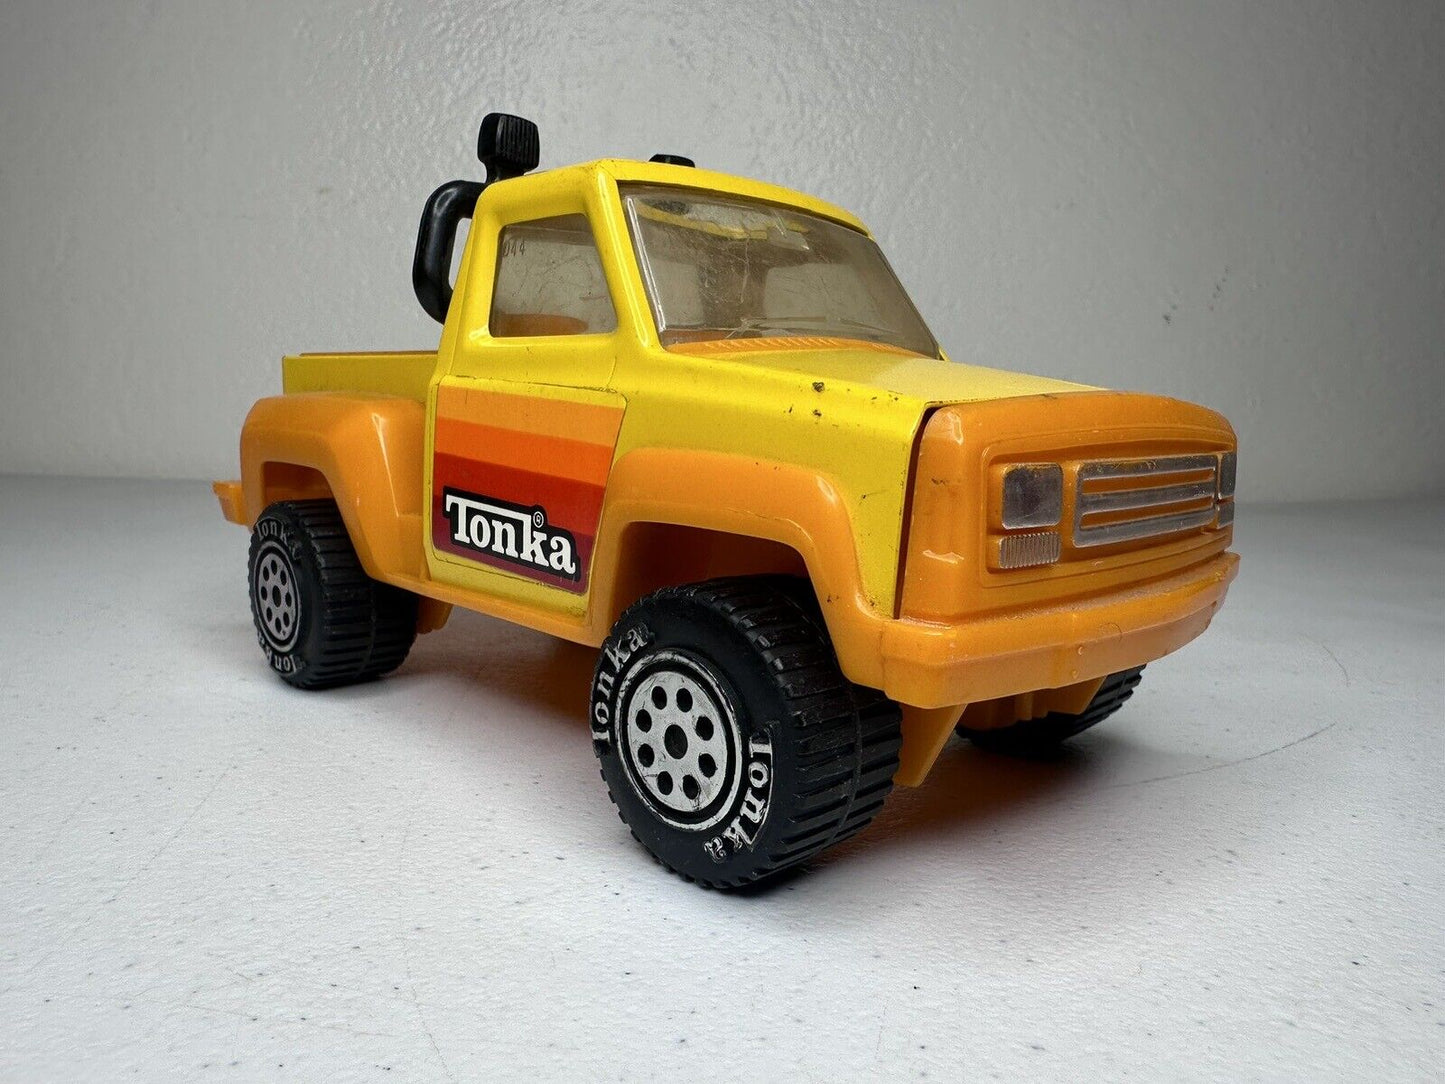 Vintage 1979 Tonka Pickup Truck 8" Metal & Plastic Toy Vehicle - Retro Original - TreasuTiques